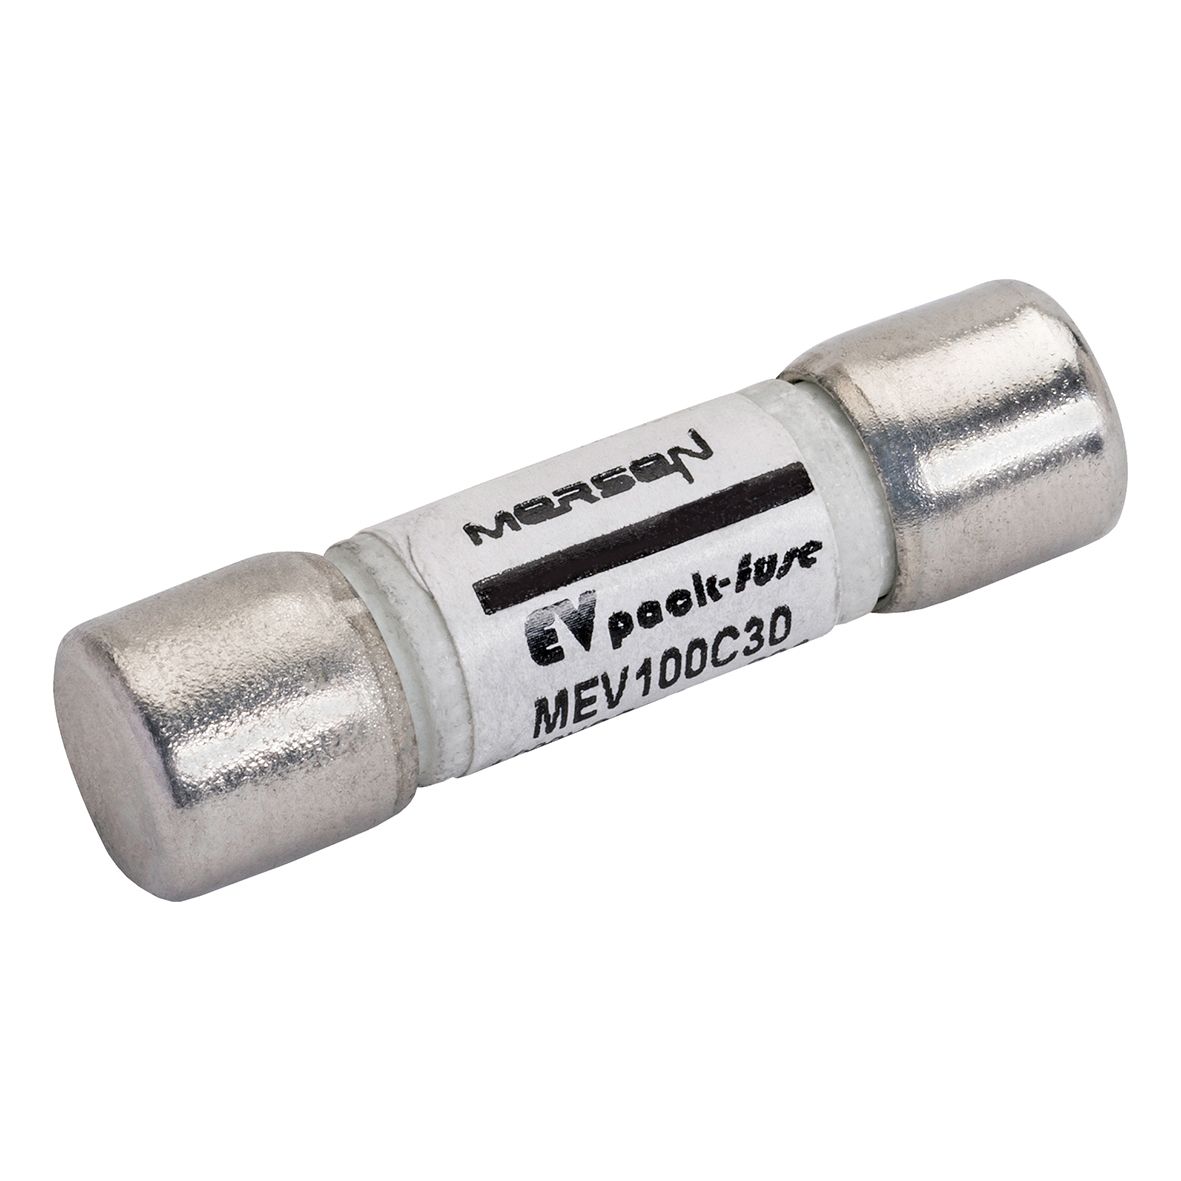 MEV100C30 - EVpack-fuse MEV100, 1,000 VDC Max., L/R ≤ 1ms, 30 A, Ferrule Fuse